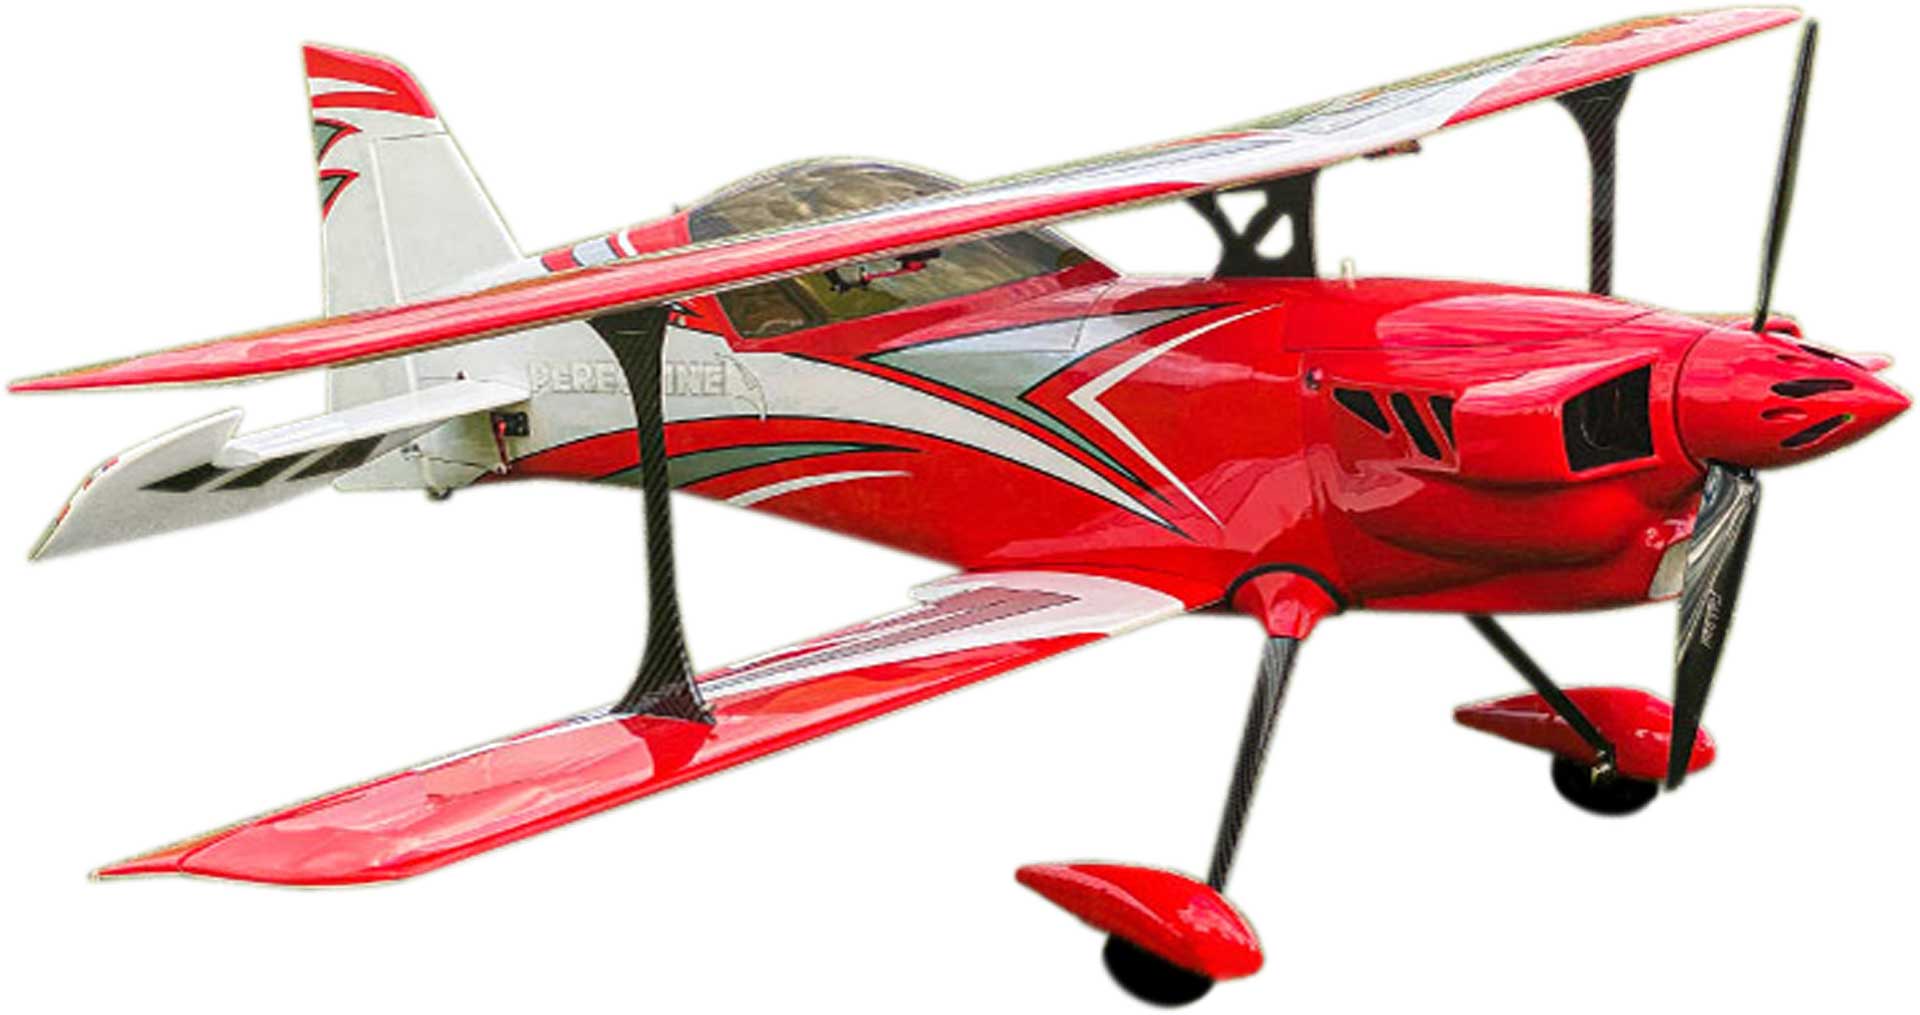 EXTREMEFLIGHT-RC Peregrine 53" red/white biplane ARF